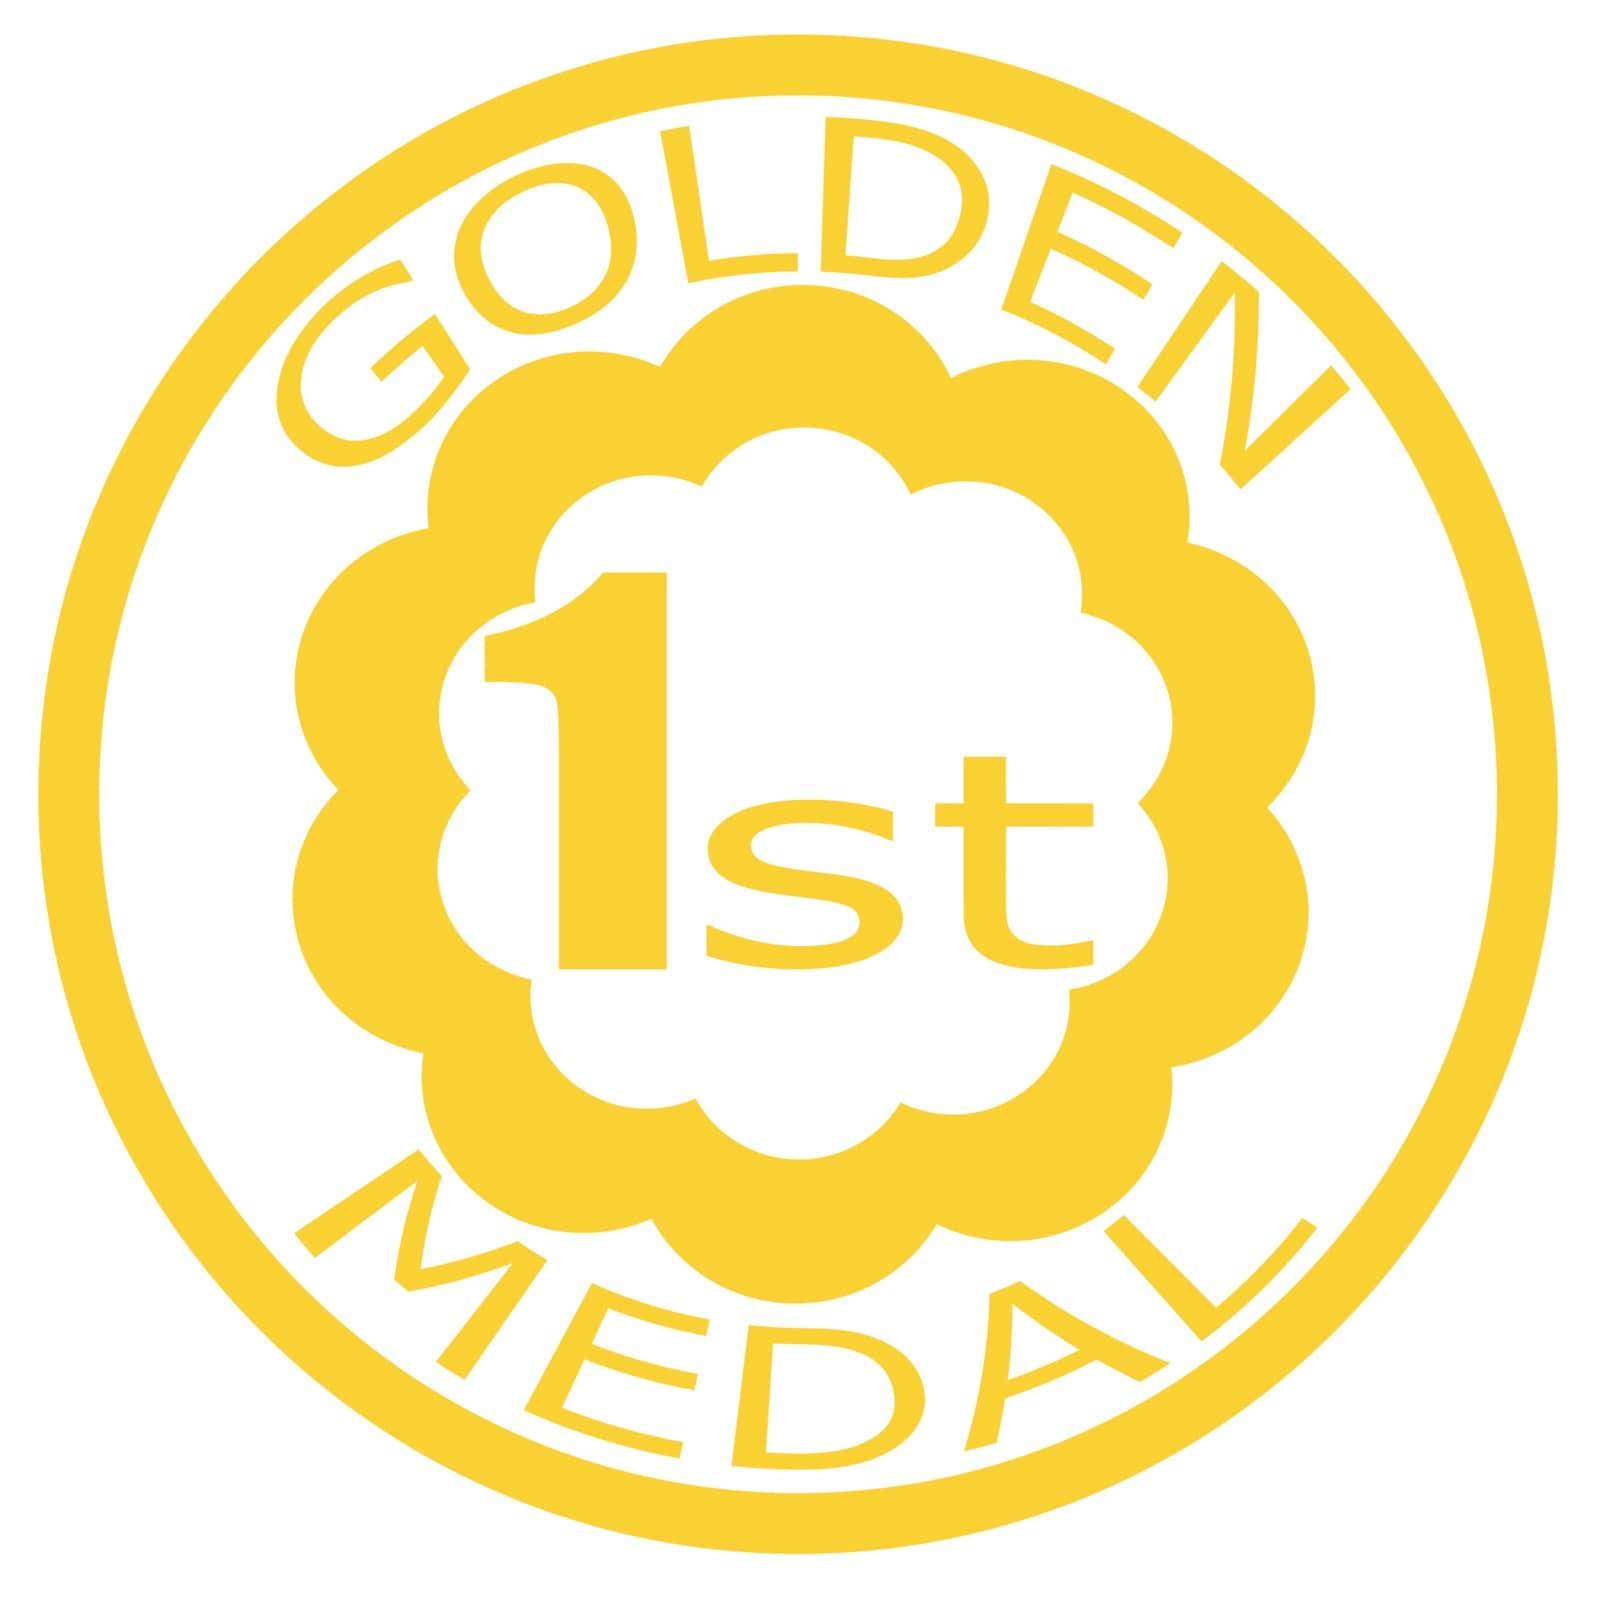 Stamp with text golden medal inside, vector illustration